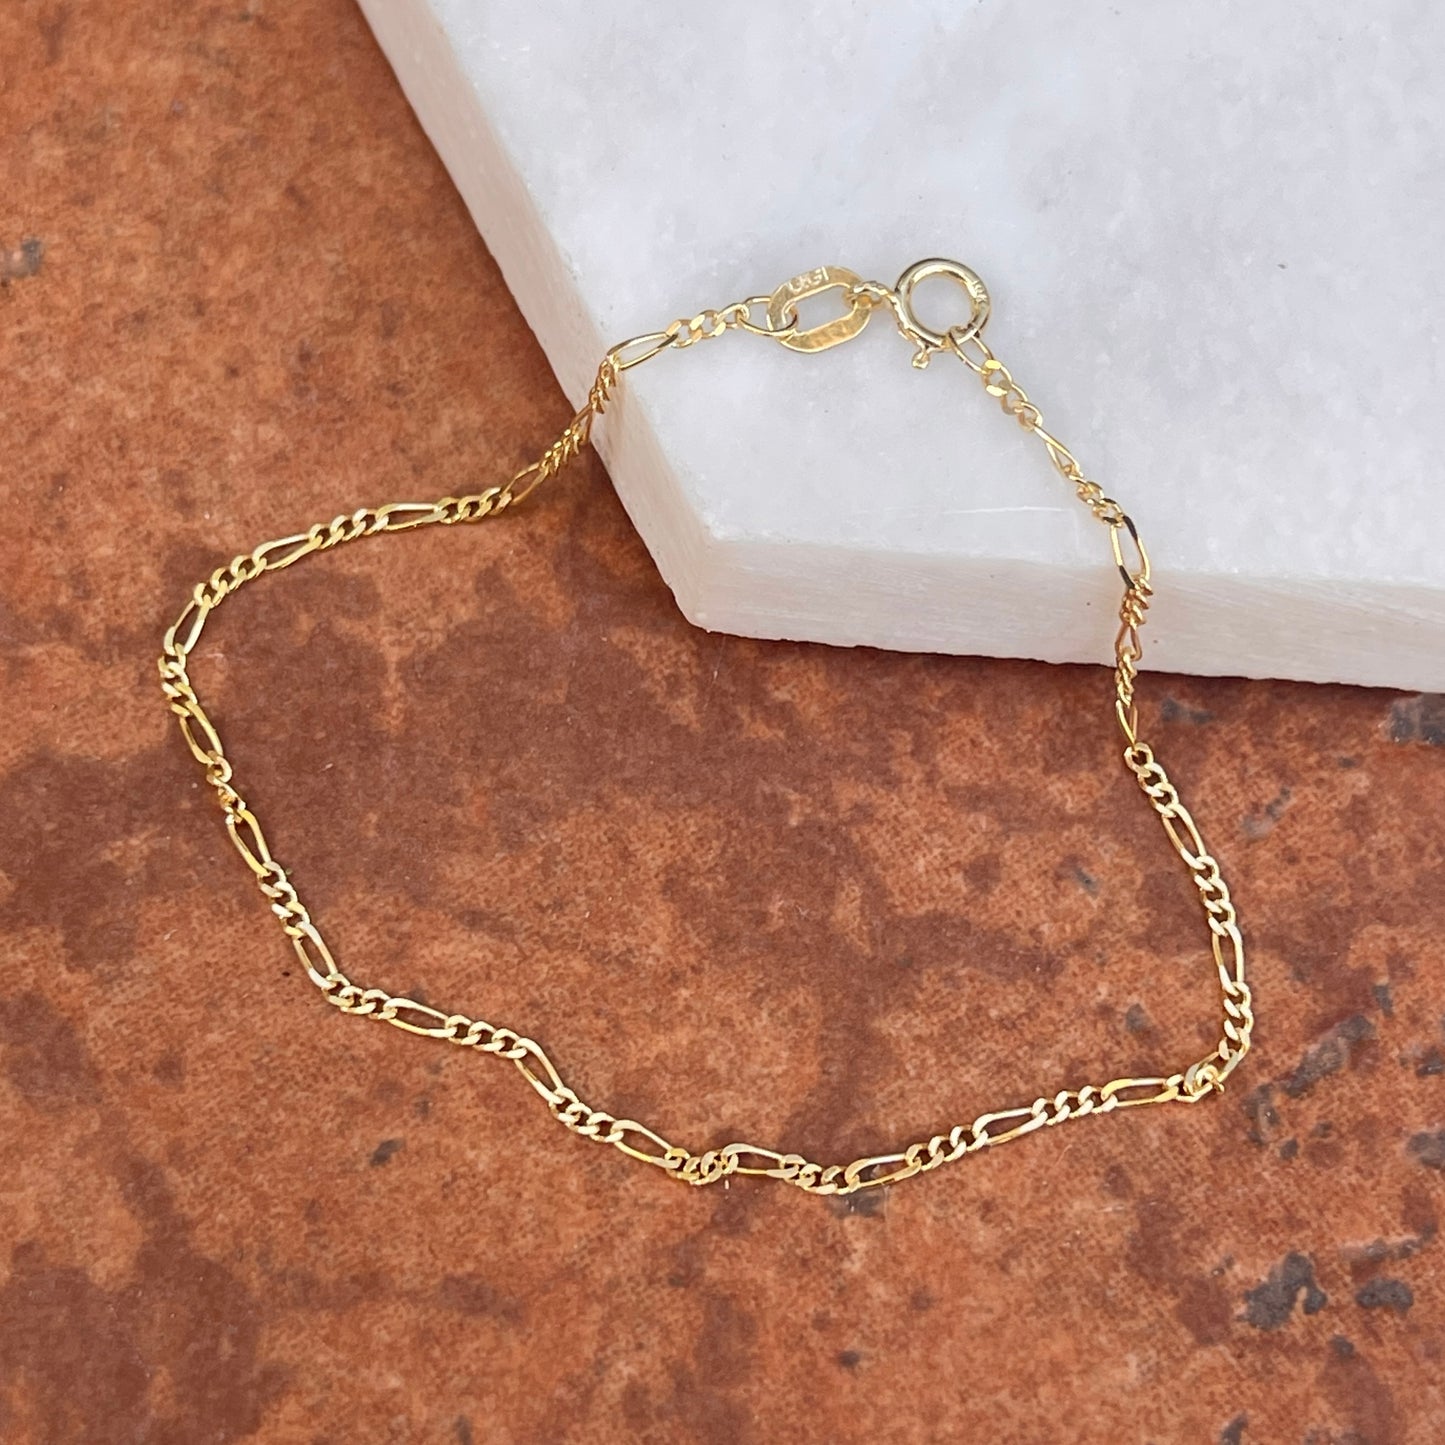 10KT Yellow Gold 1.25mm Singapore Chain Link Bracelet